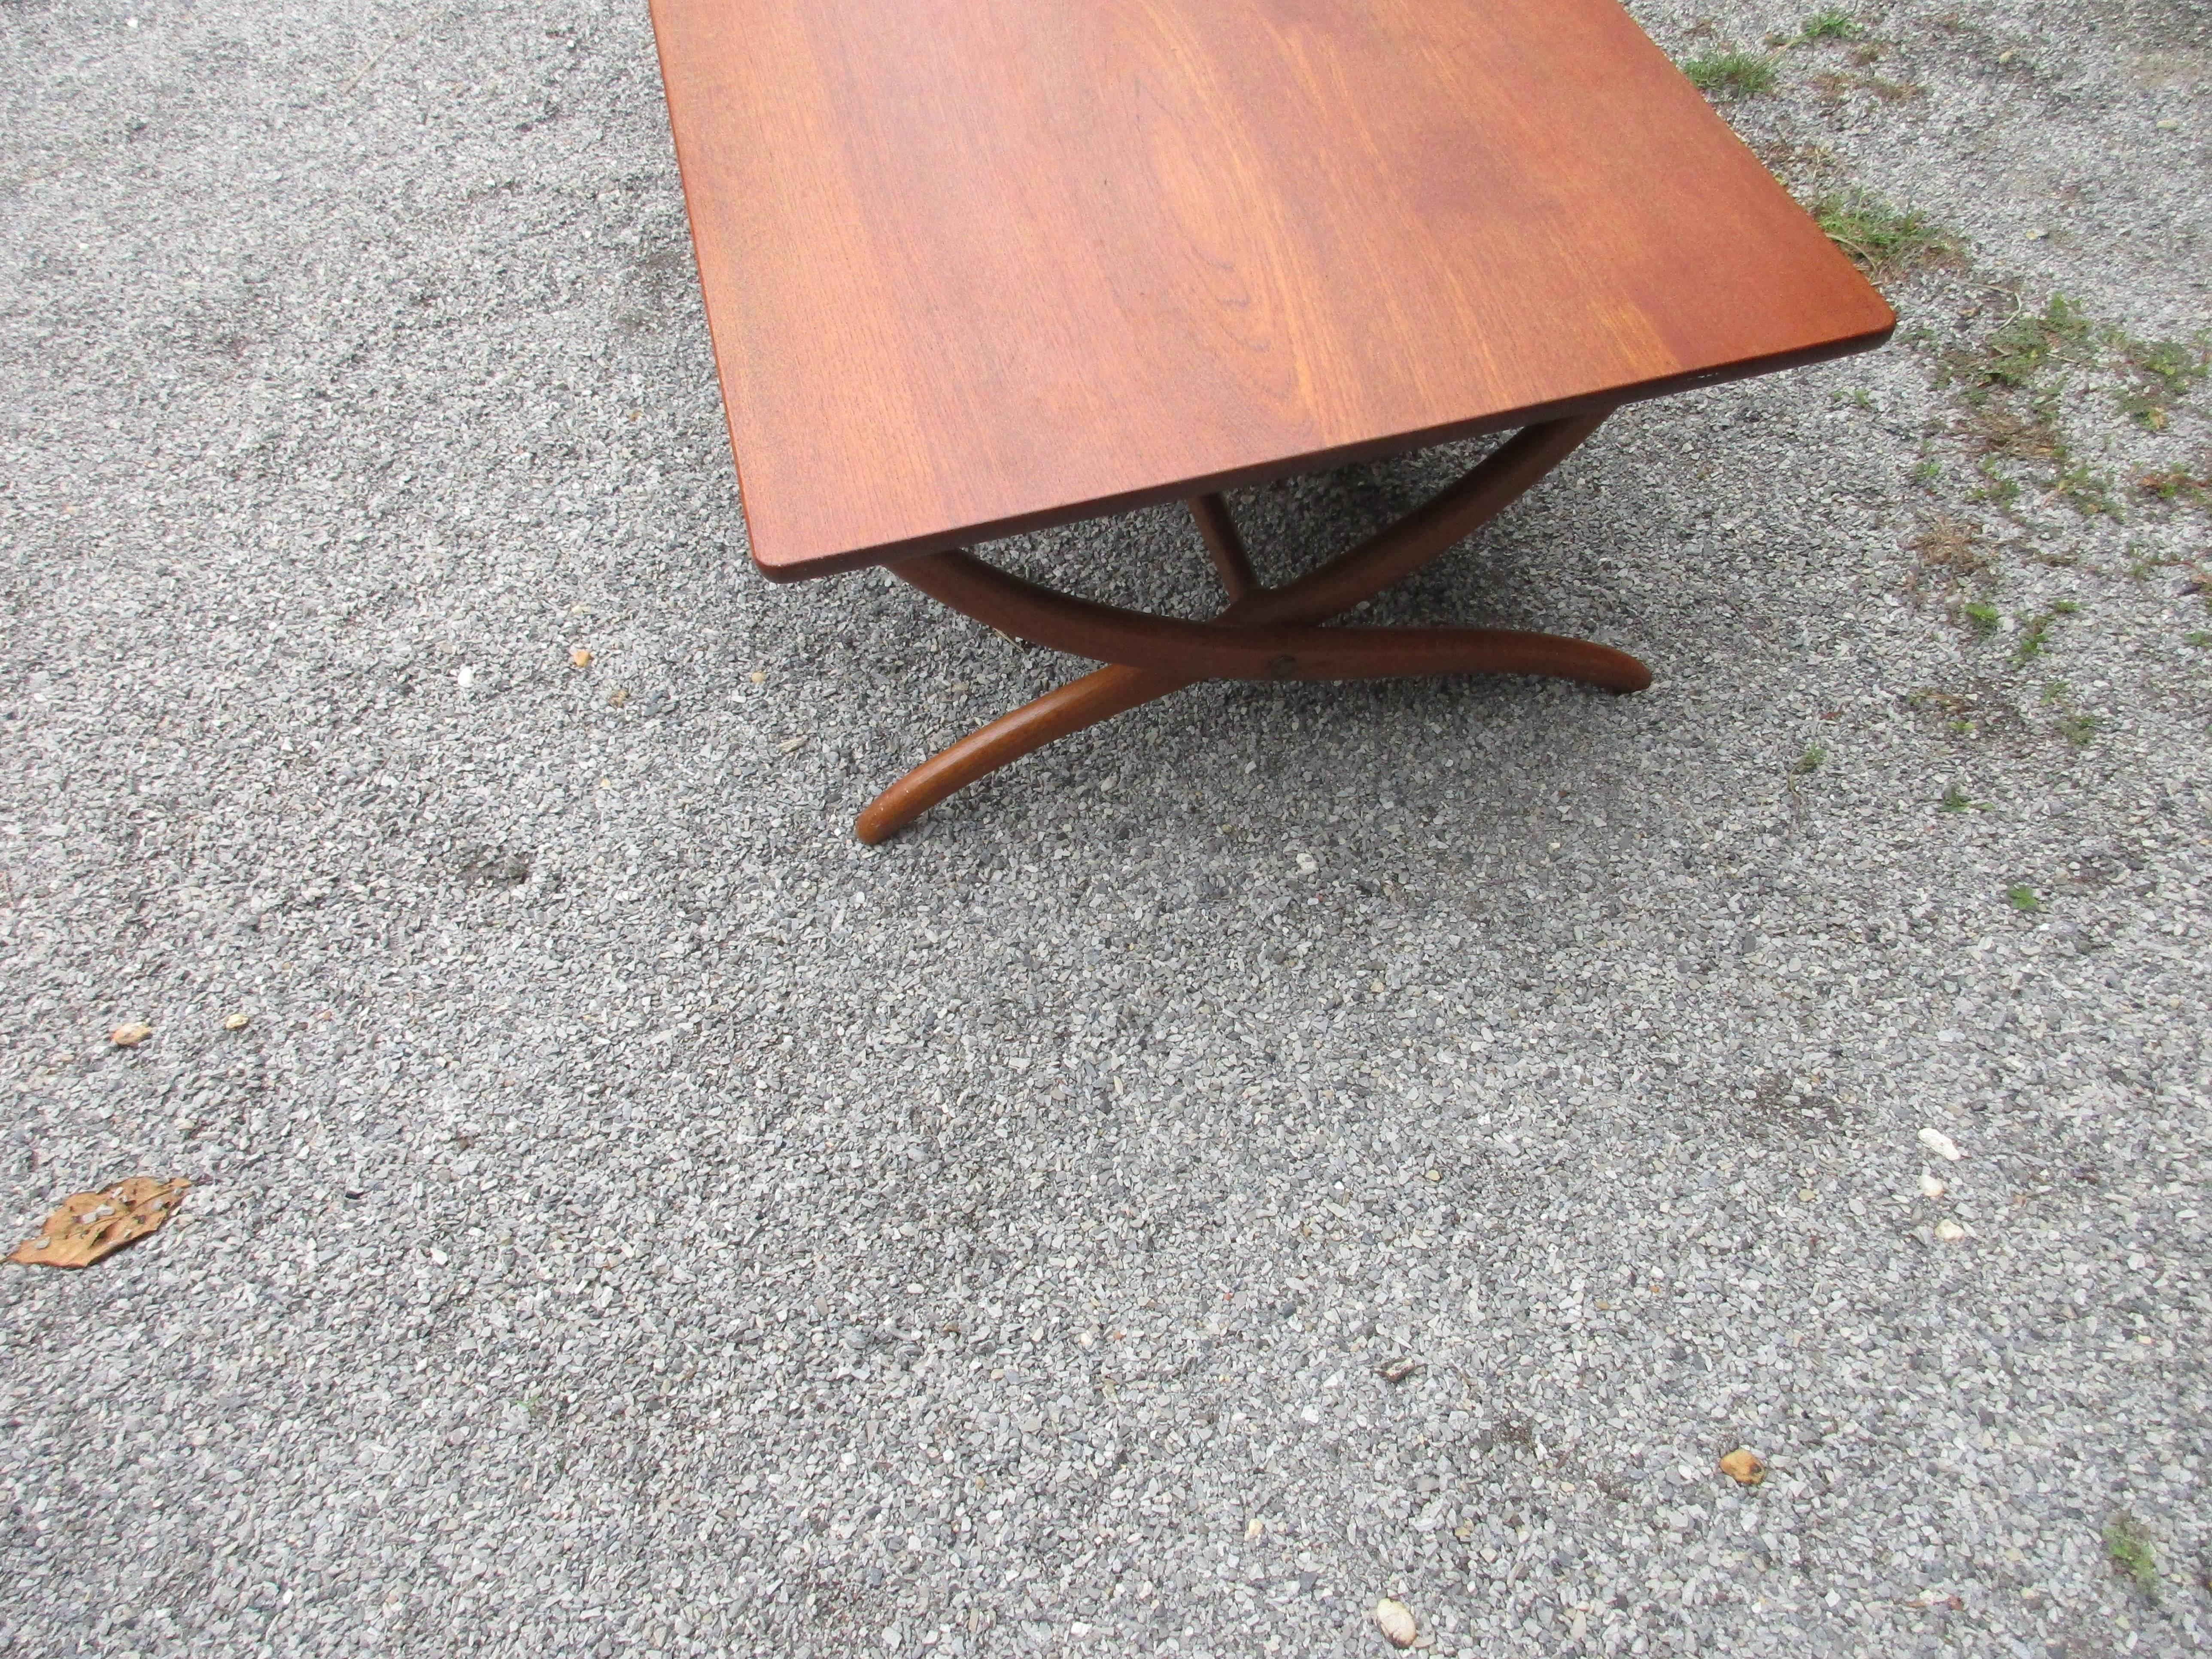 Mid-Century Ole Wanscher adjustable coffee table for Rud Rasmussen.
Adjusts from 23